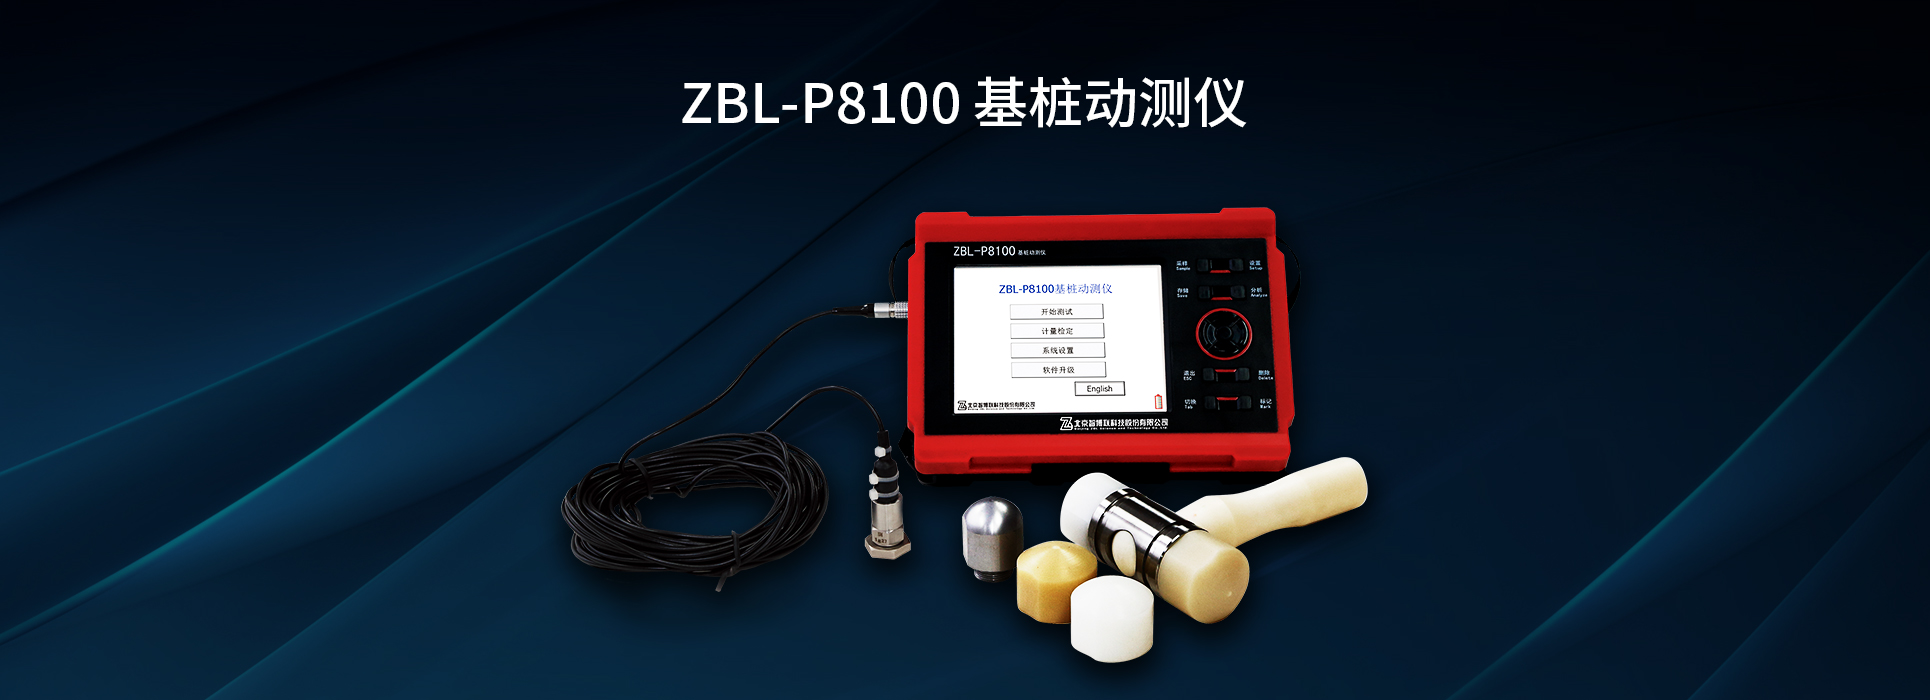 ZBL-P8100基樁動測儀